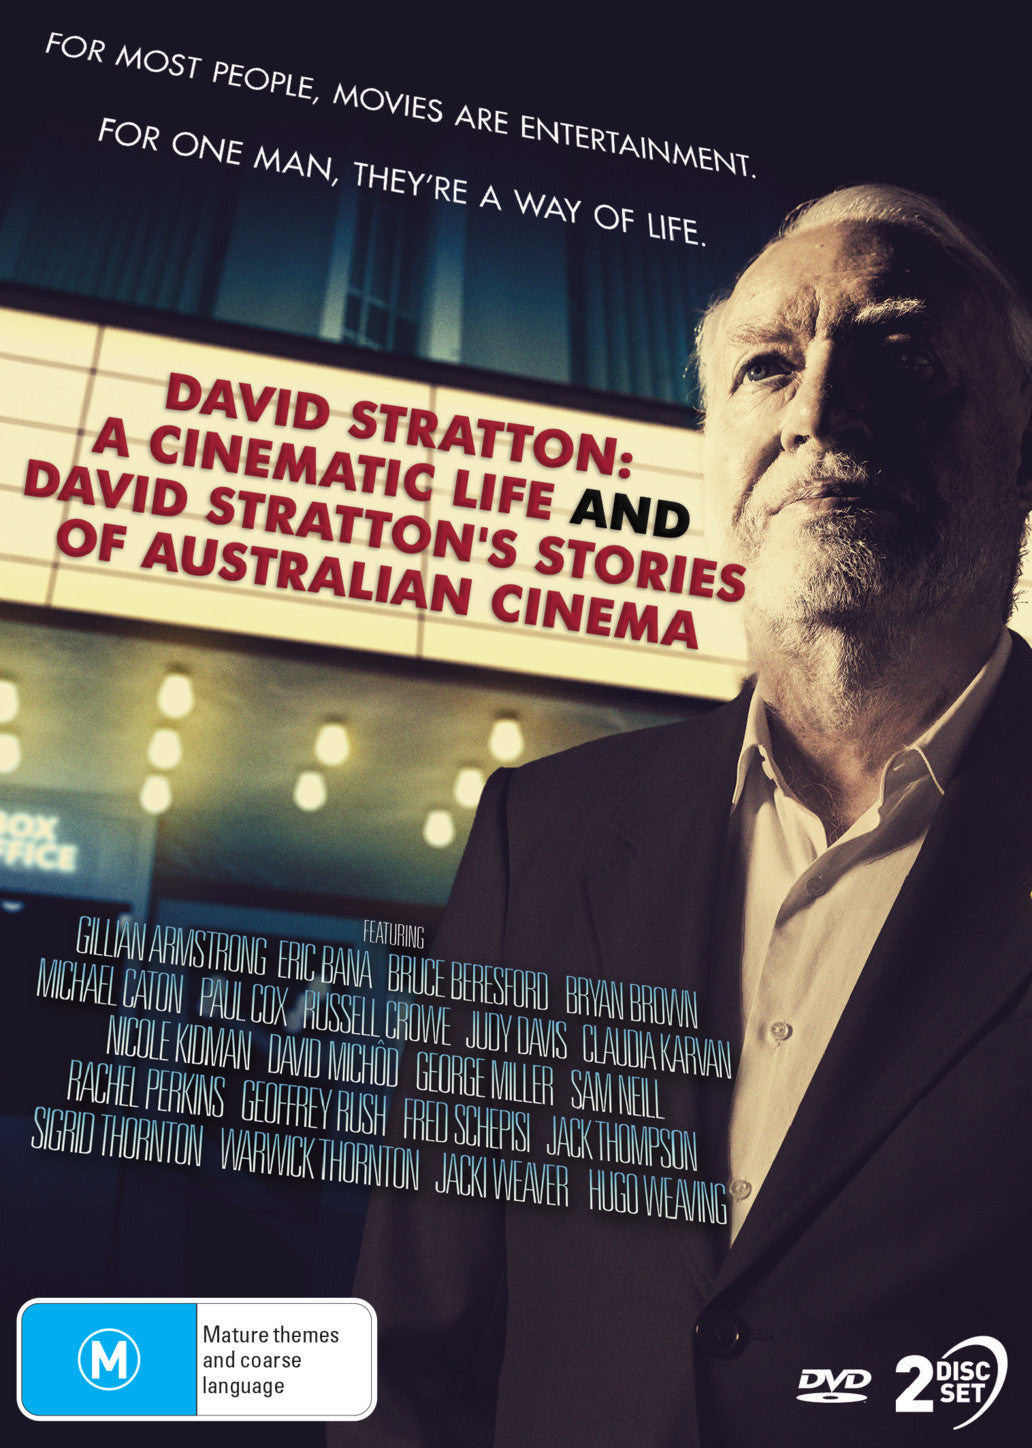 DAVID STRATTON: A CINEMATIC LIFE & DAVID STRATTON'S STORIES OF AUSTRALIAN CINEMA